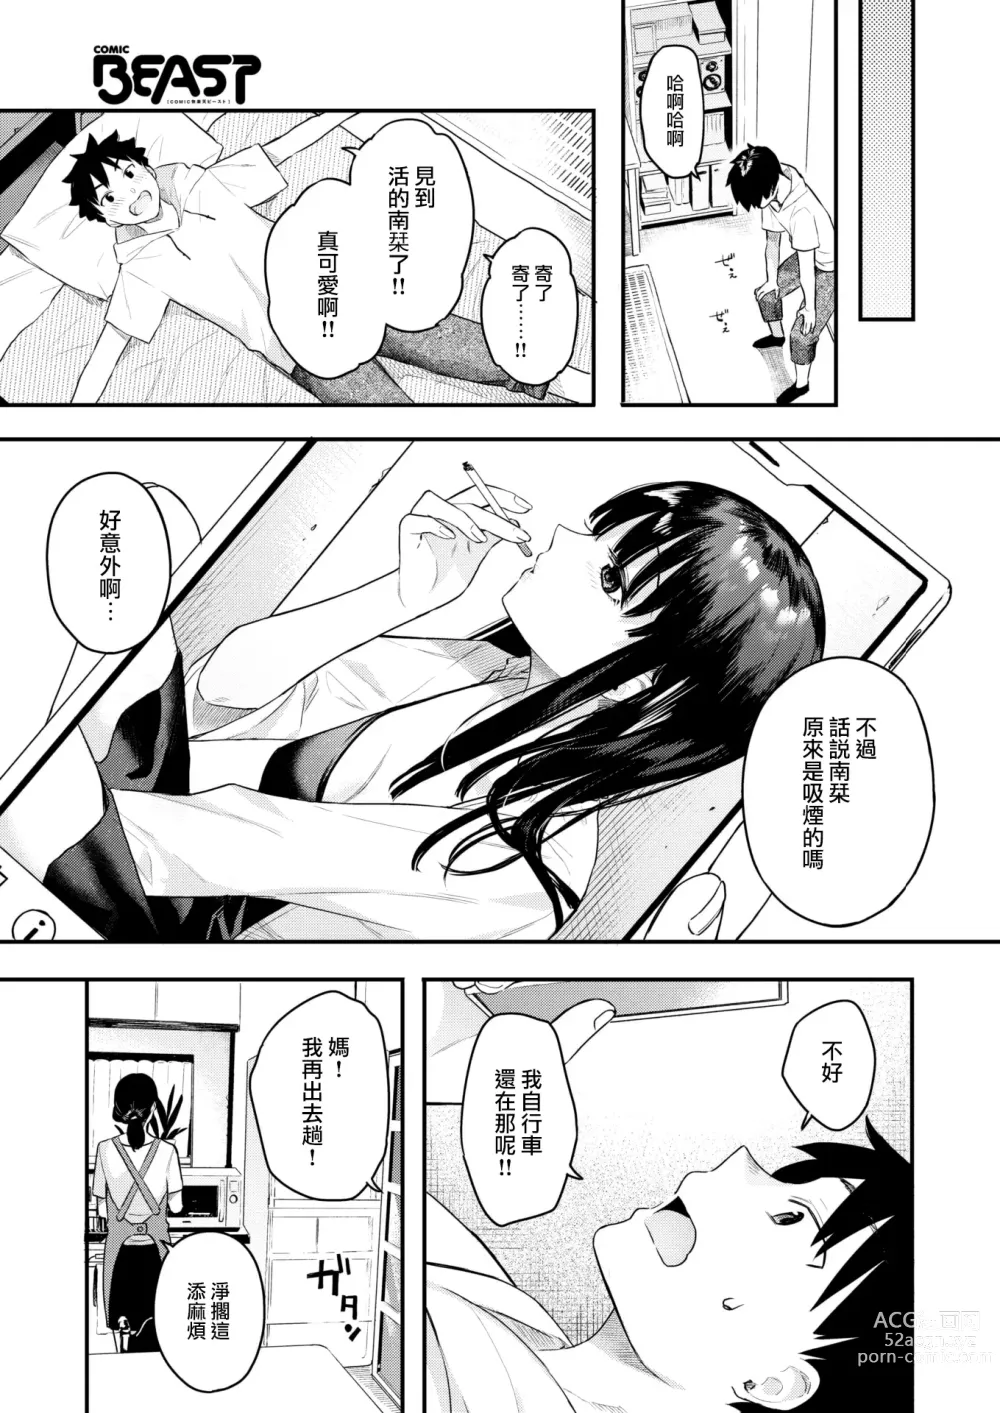 Page 6 of manga Anohi no kagero